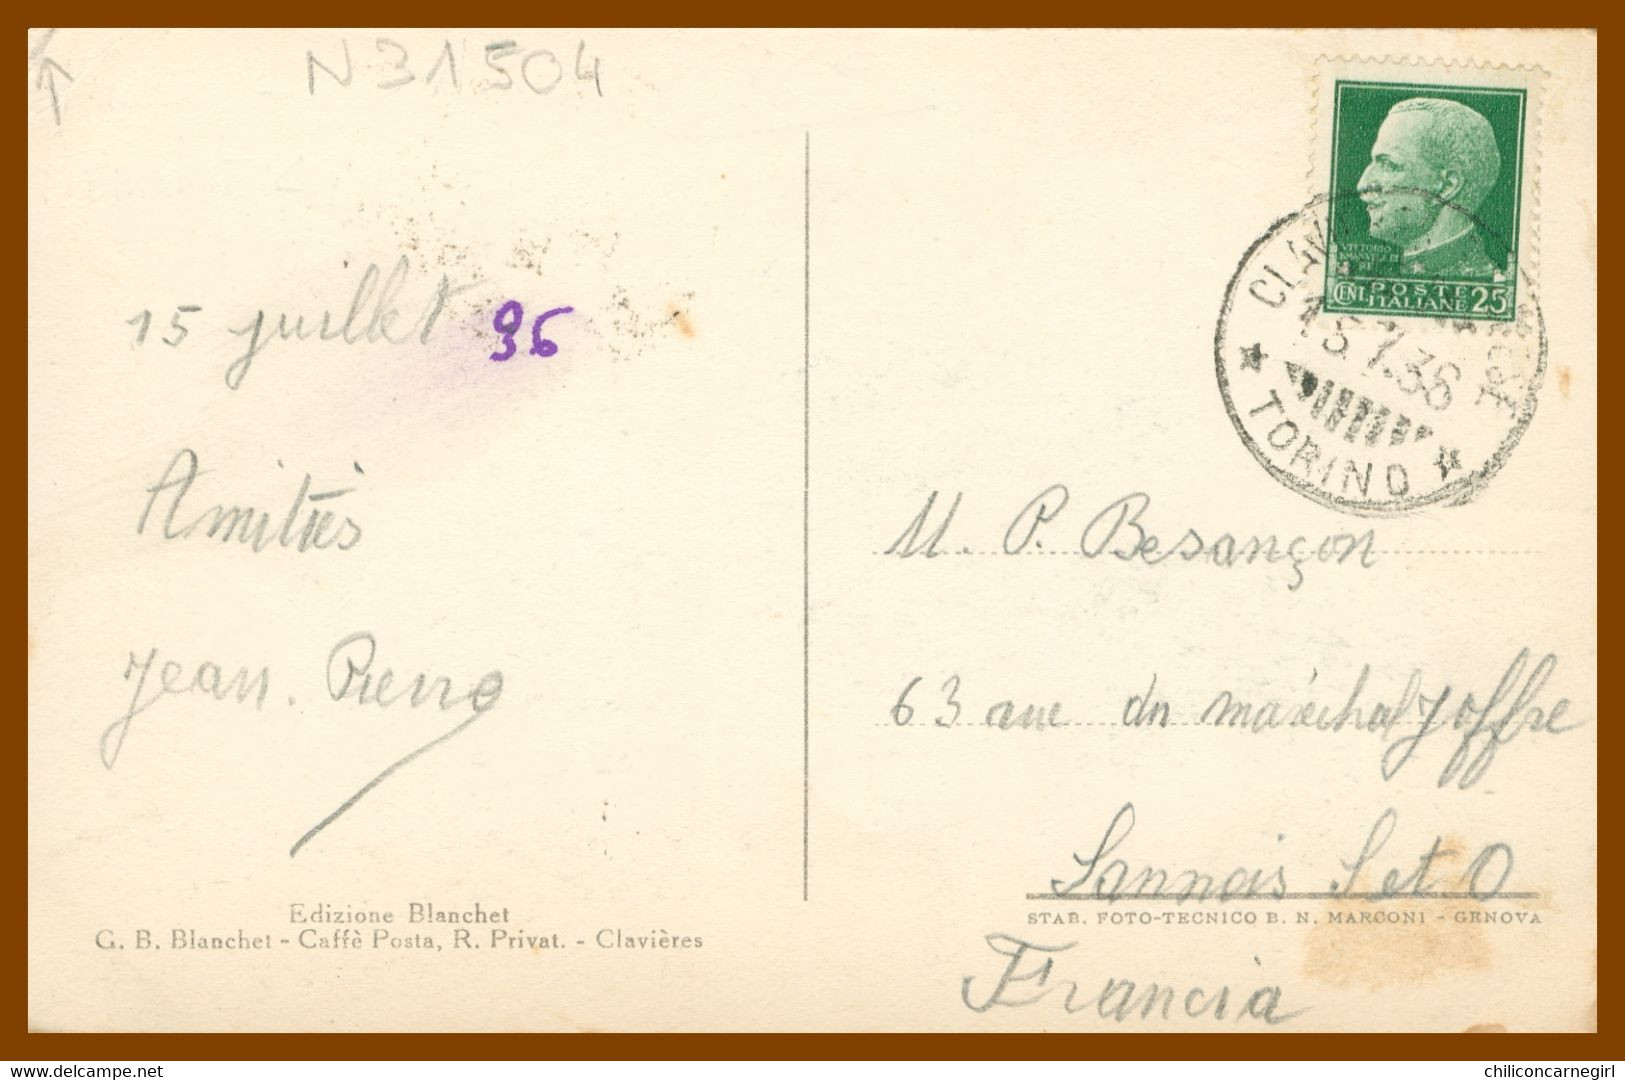 CLAVIERES - Albergo Savoia - Edit. BLANCHET Caffé Posta R. Privat. - Foto MARCONI - 1936 - Cafés, Hôtels & Restaurants